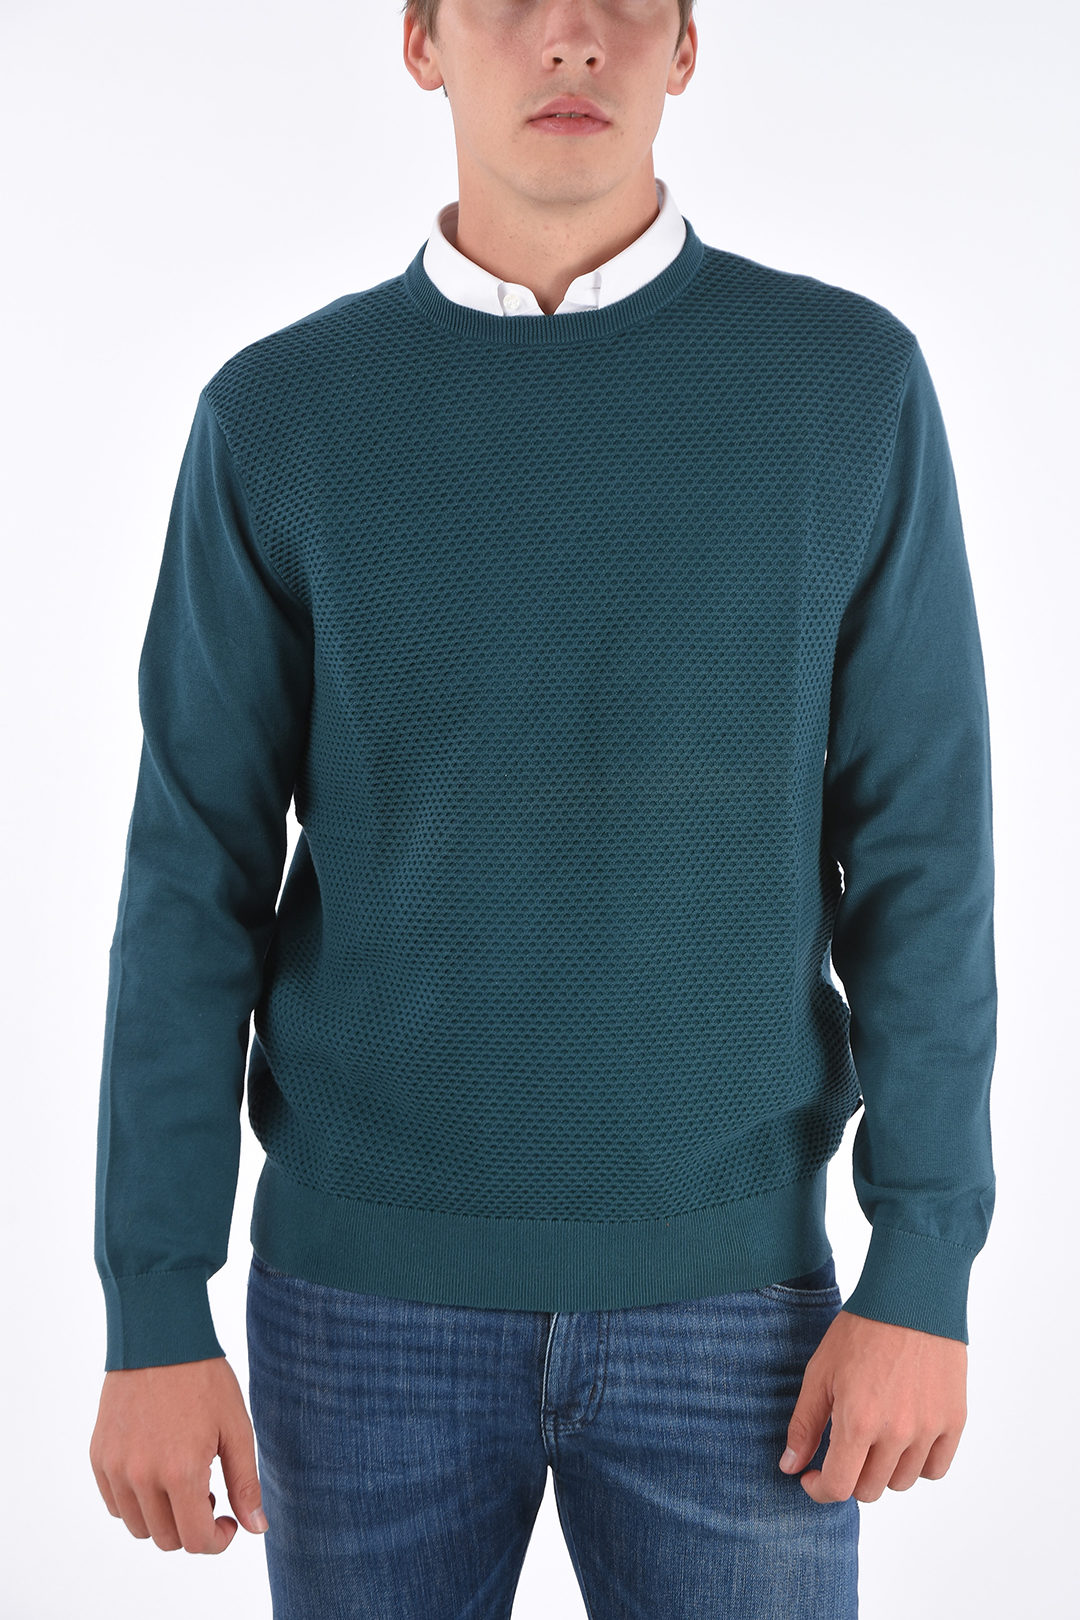 Armani ARMANI EXCHANGE honeycomb crewneck sweater men - Glamood Outlet